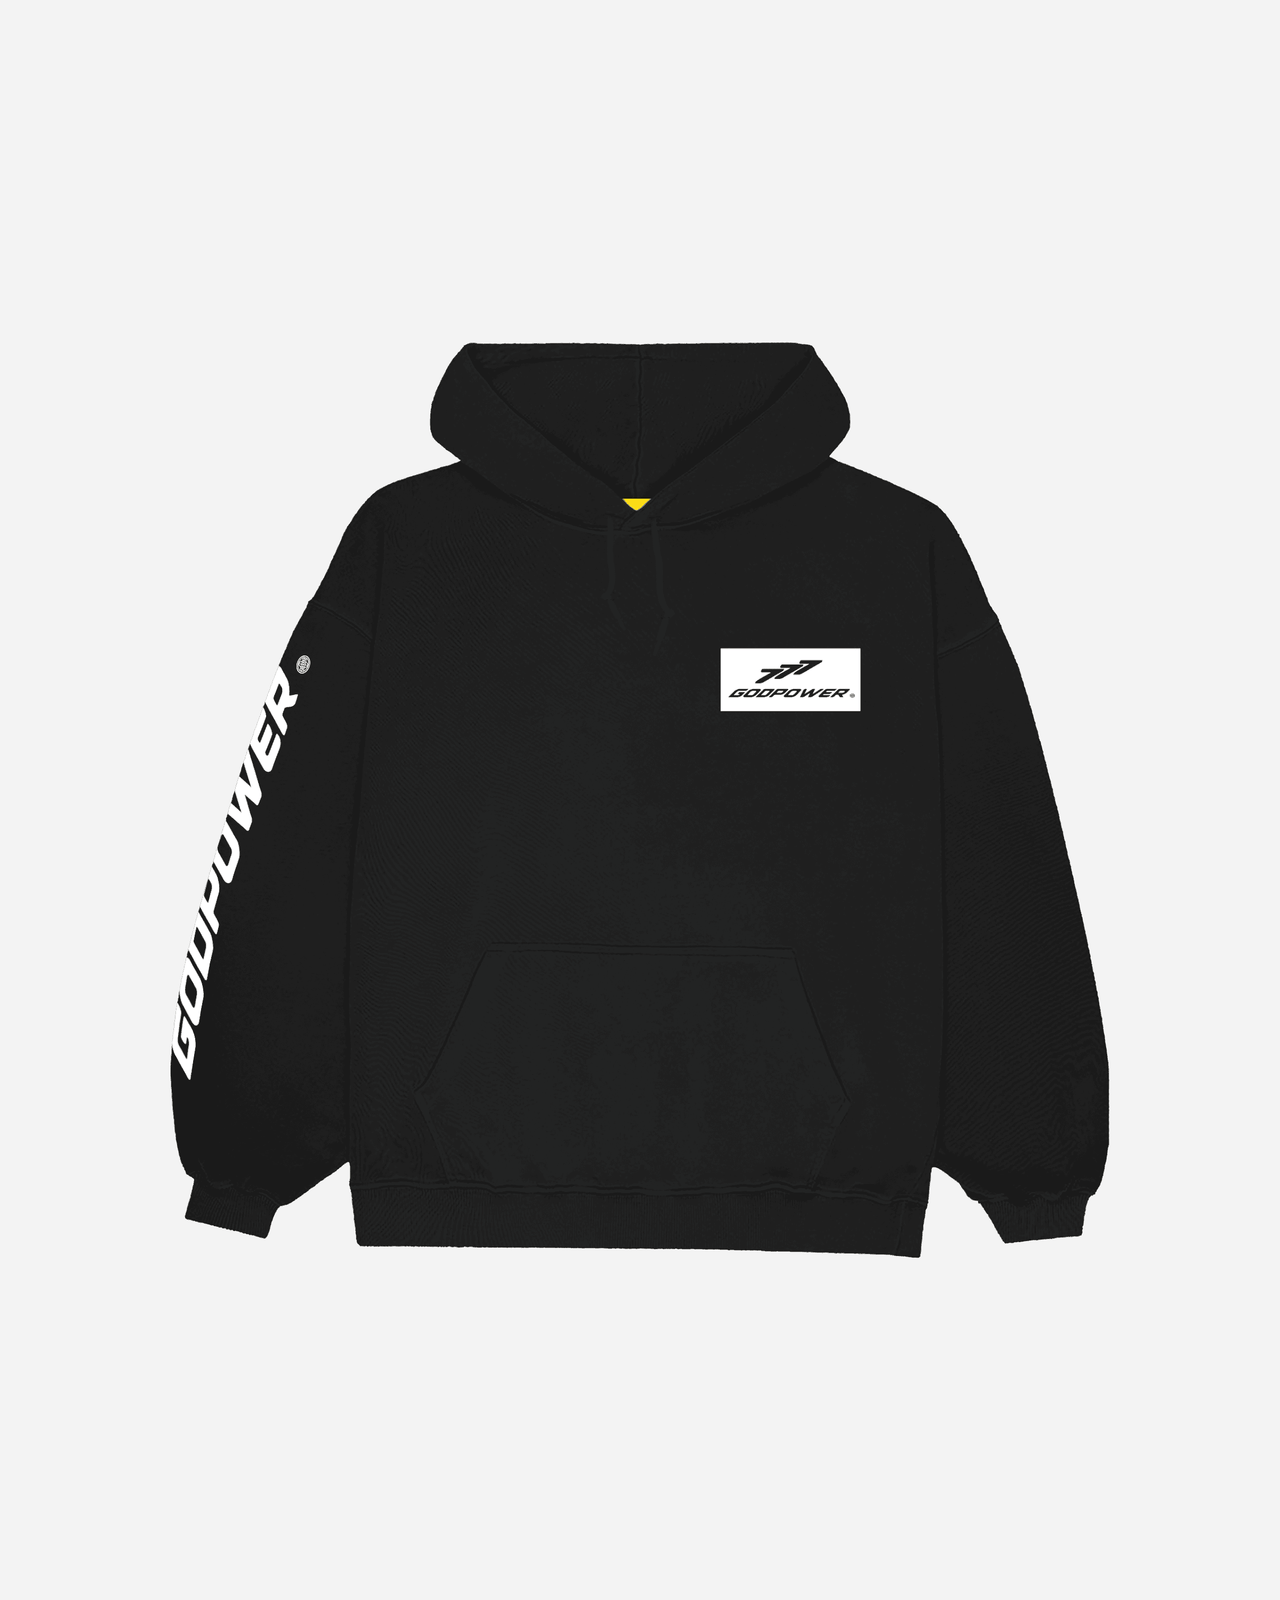 GODPOWER black hoodie christian sweatshirt by NHIM Apparel Christian clothing brand